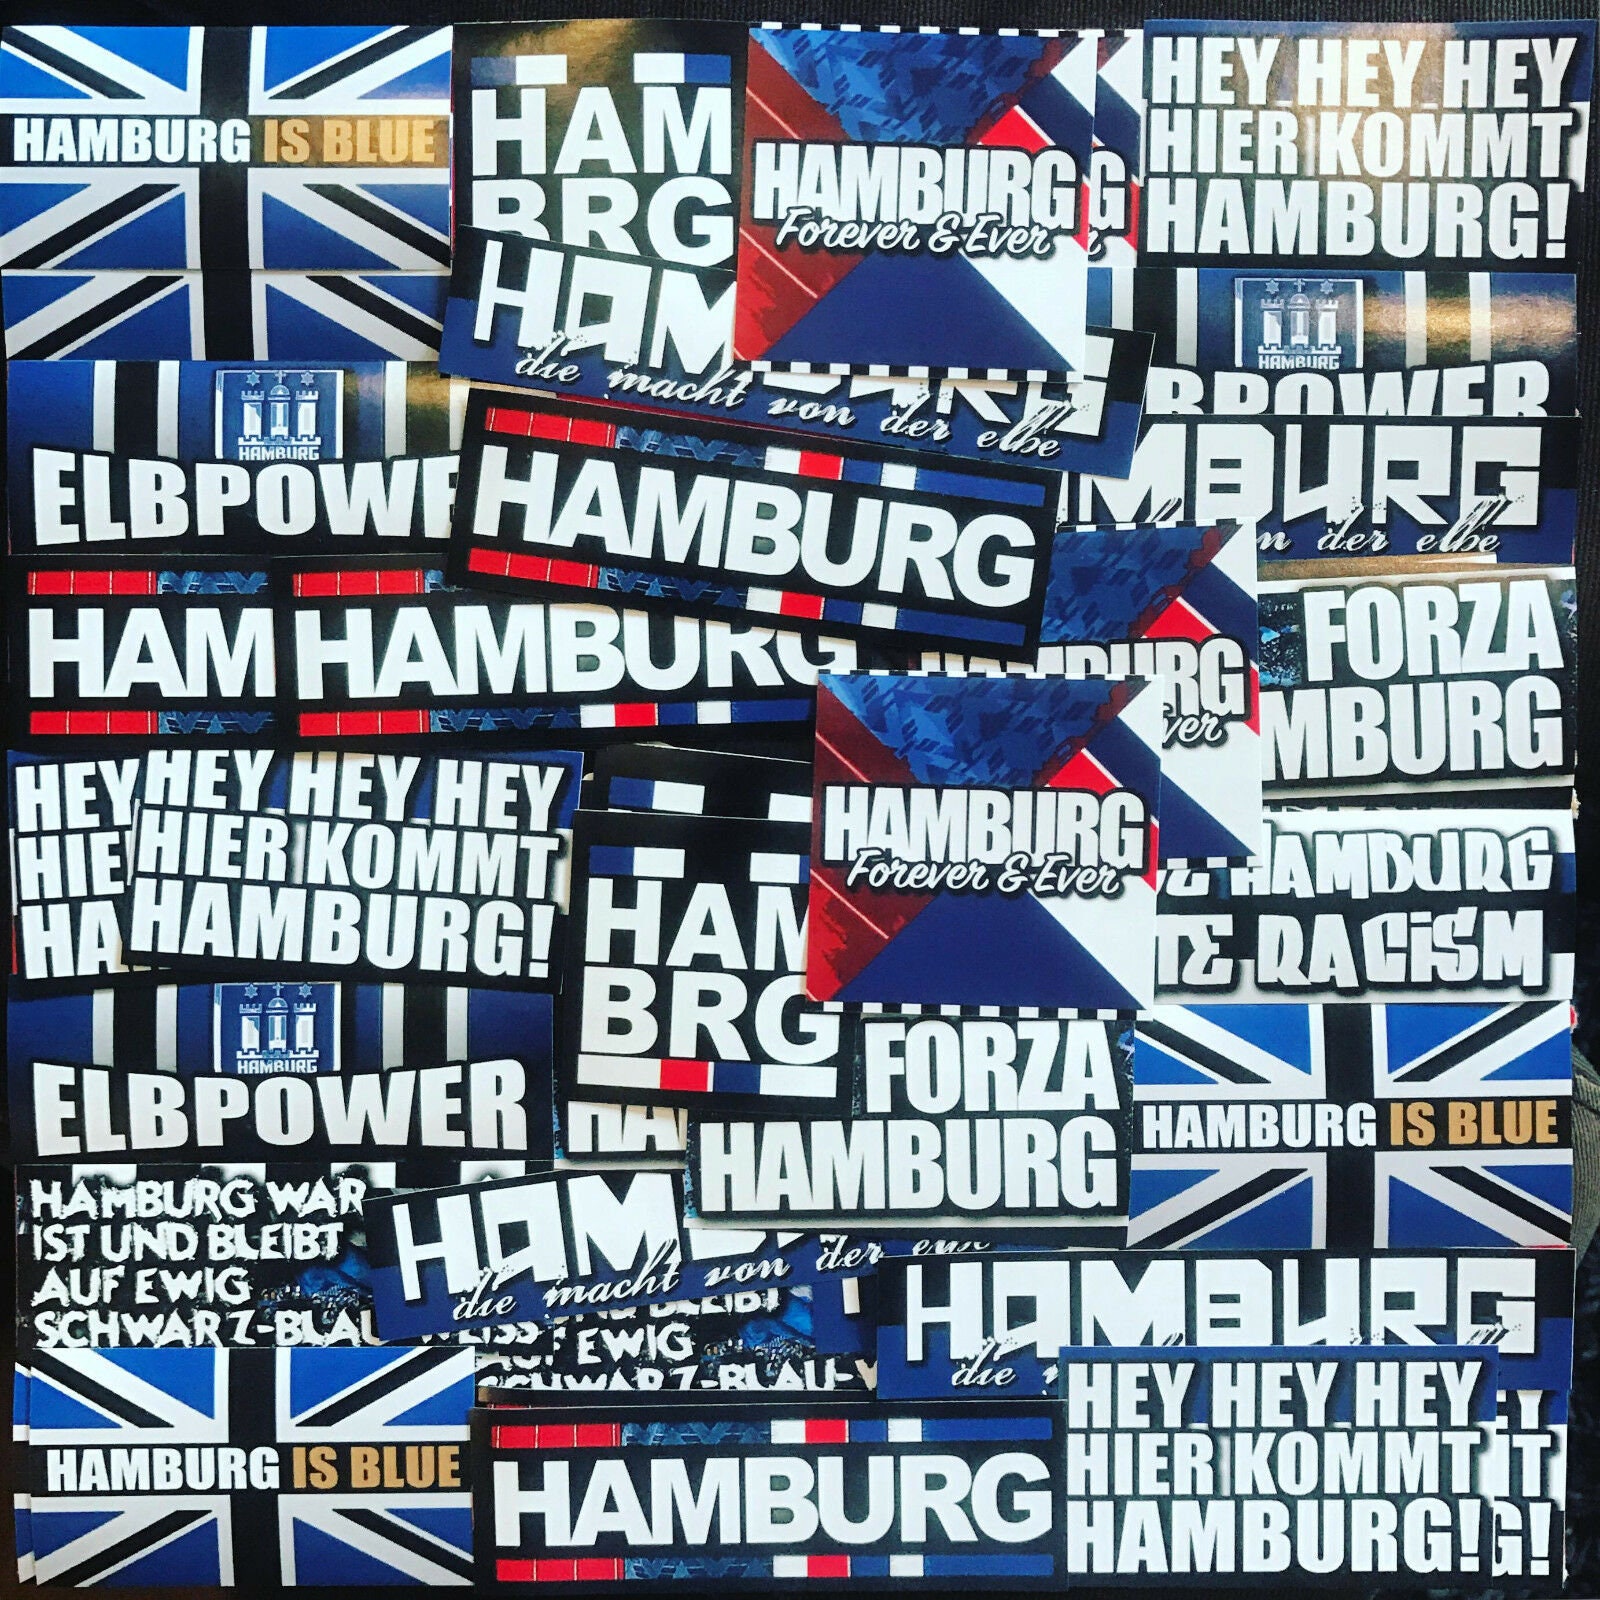 Hsv Hamburg 